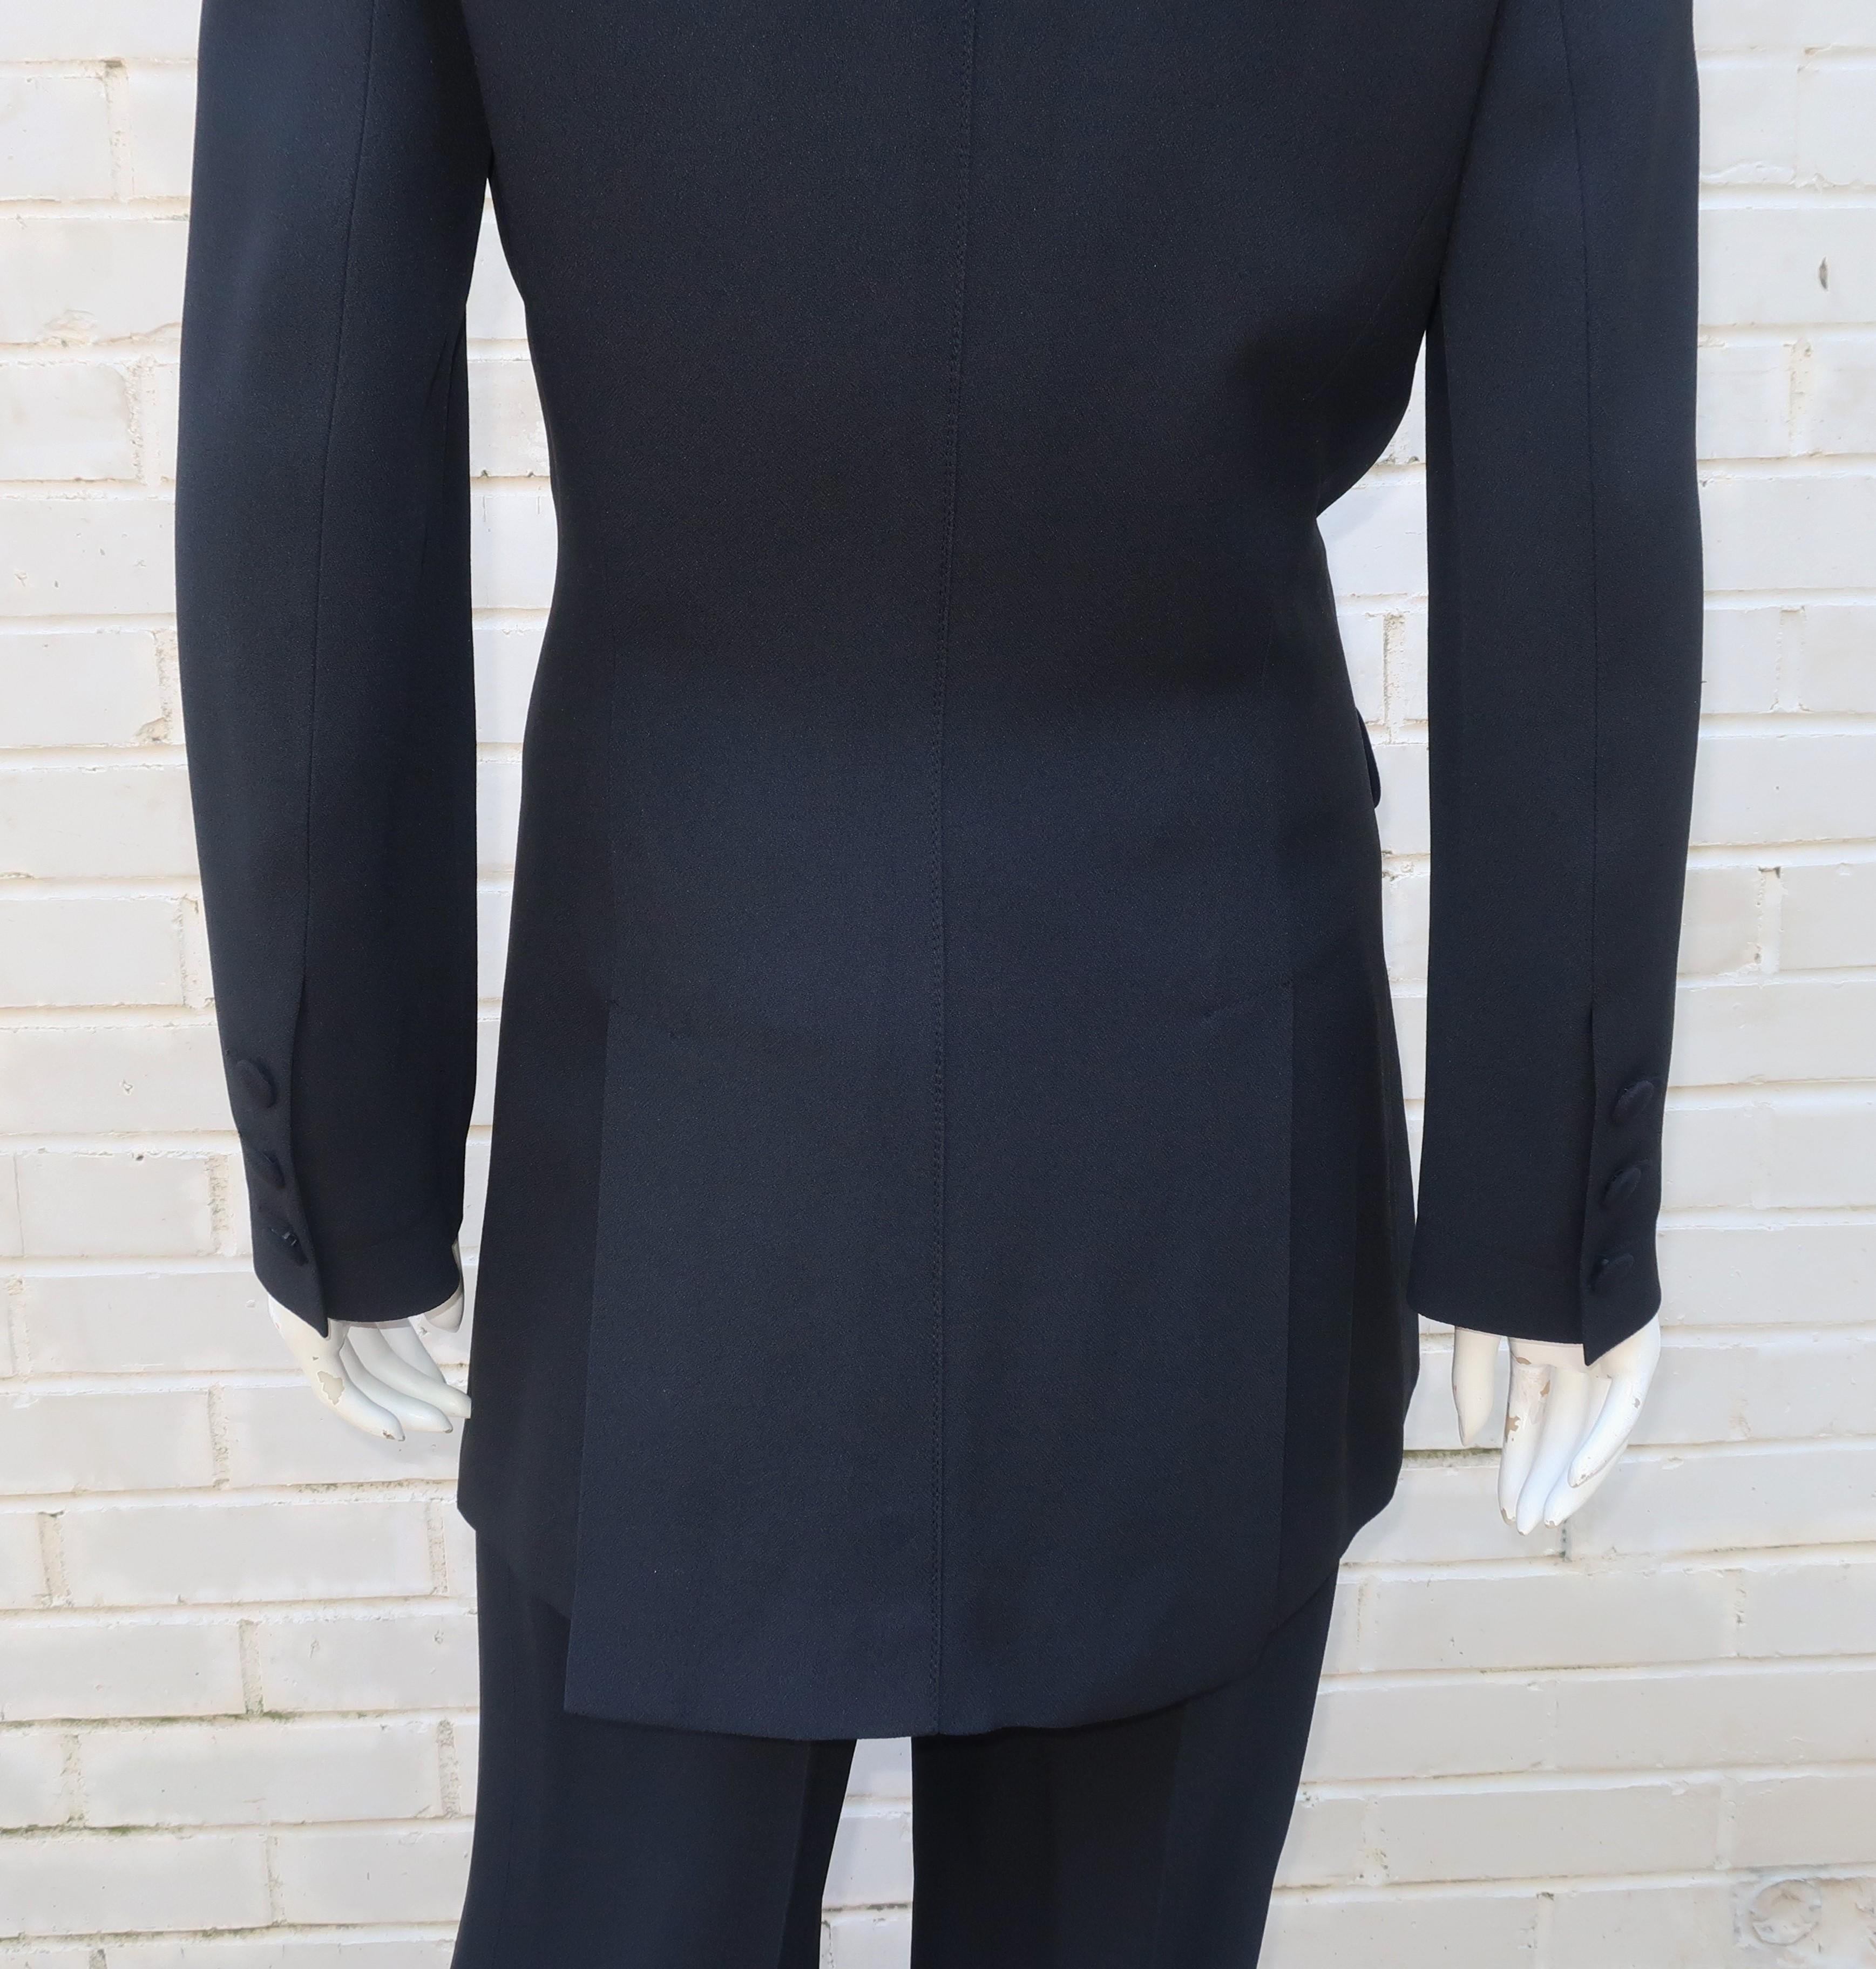 Sonia Rykiel Three Piece Tuxedo Style Black Pant Suit, 1980's For Sale 3